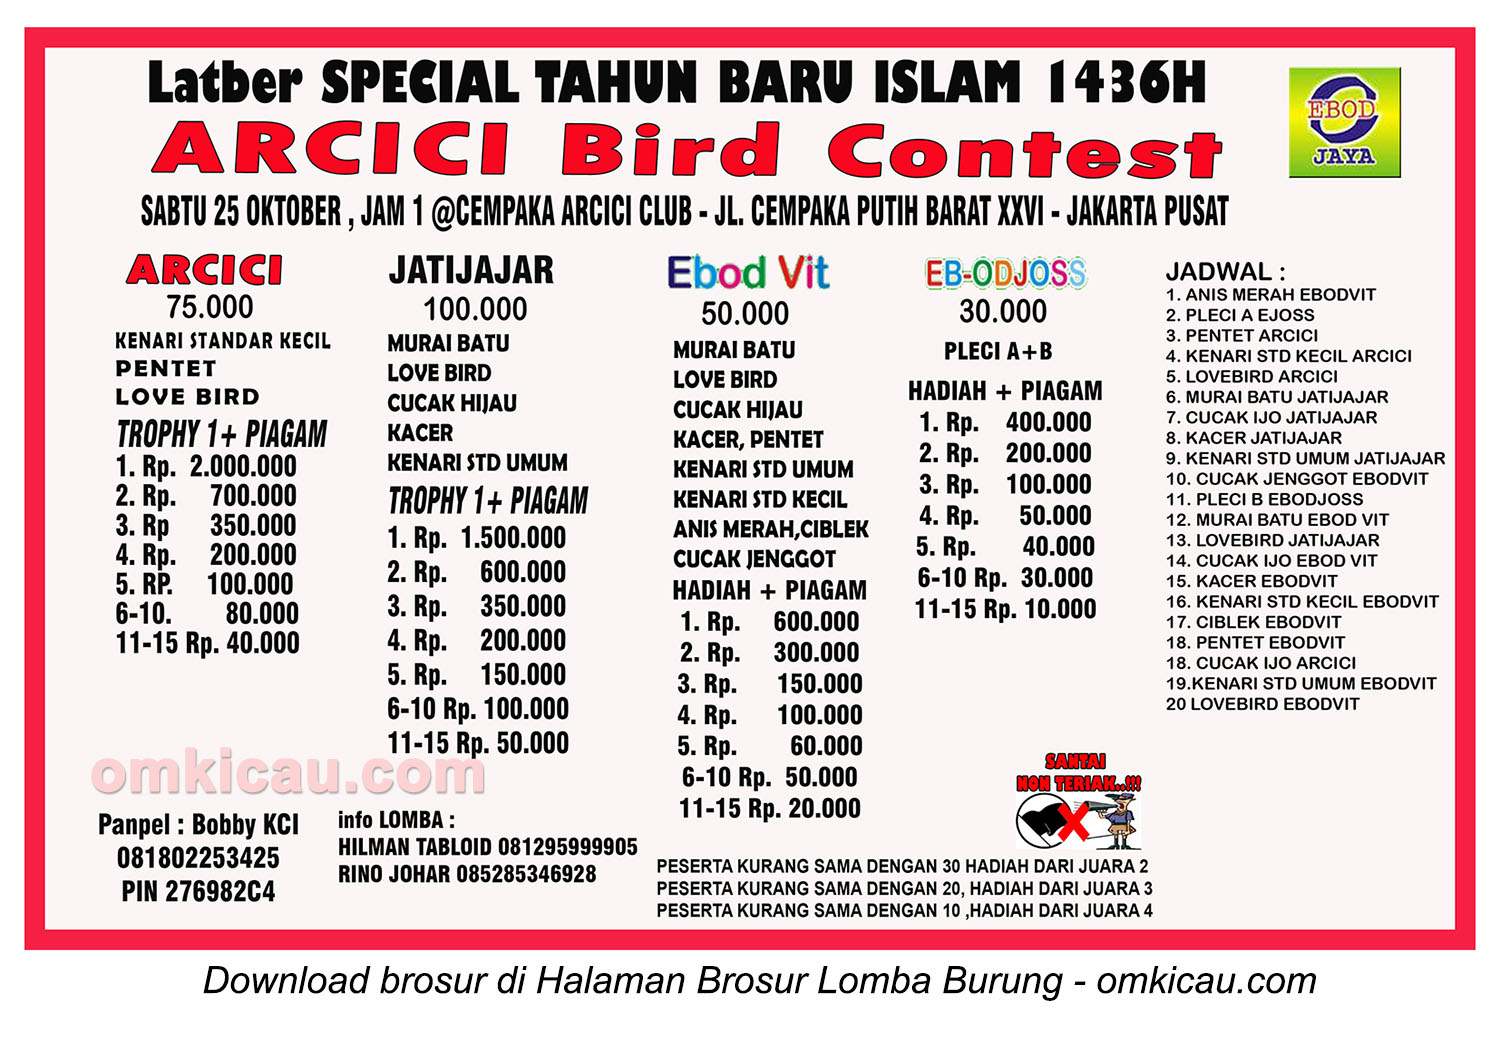 Brosur Latber Spesial Tahun Baru Islam 1436H Arcici, Jakarta Pusat, 25 Oktober 2014